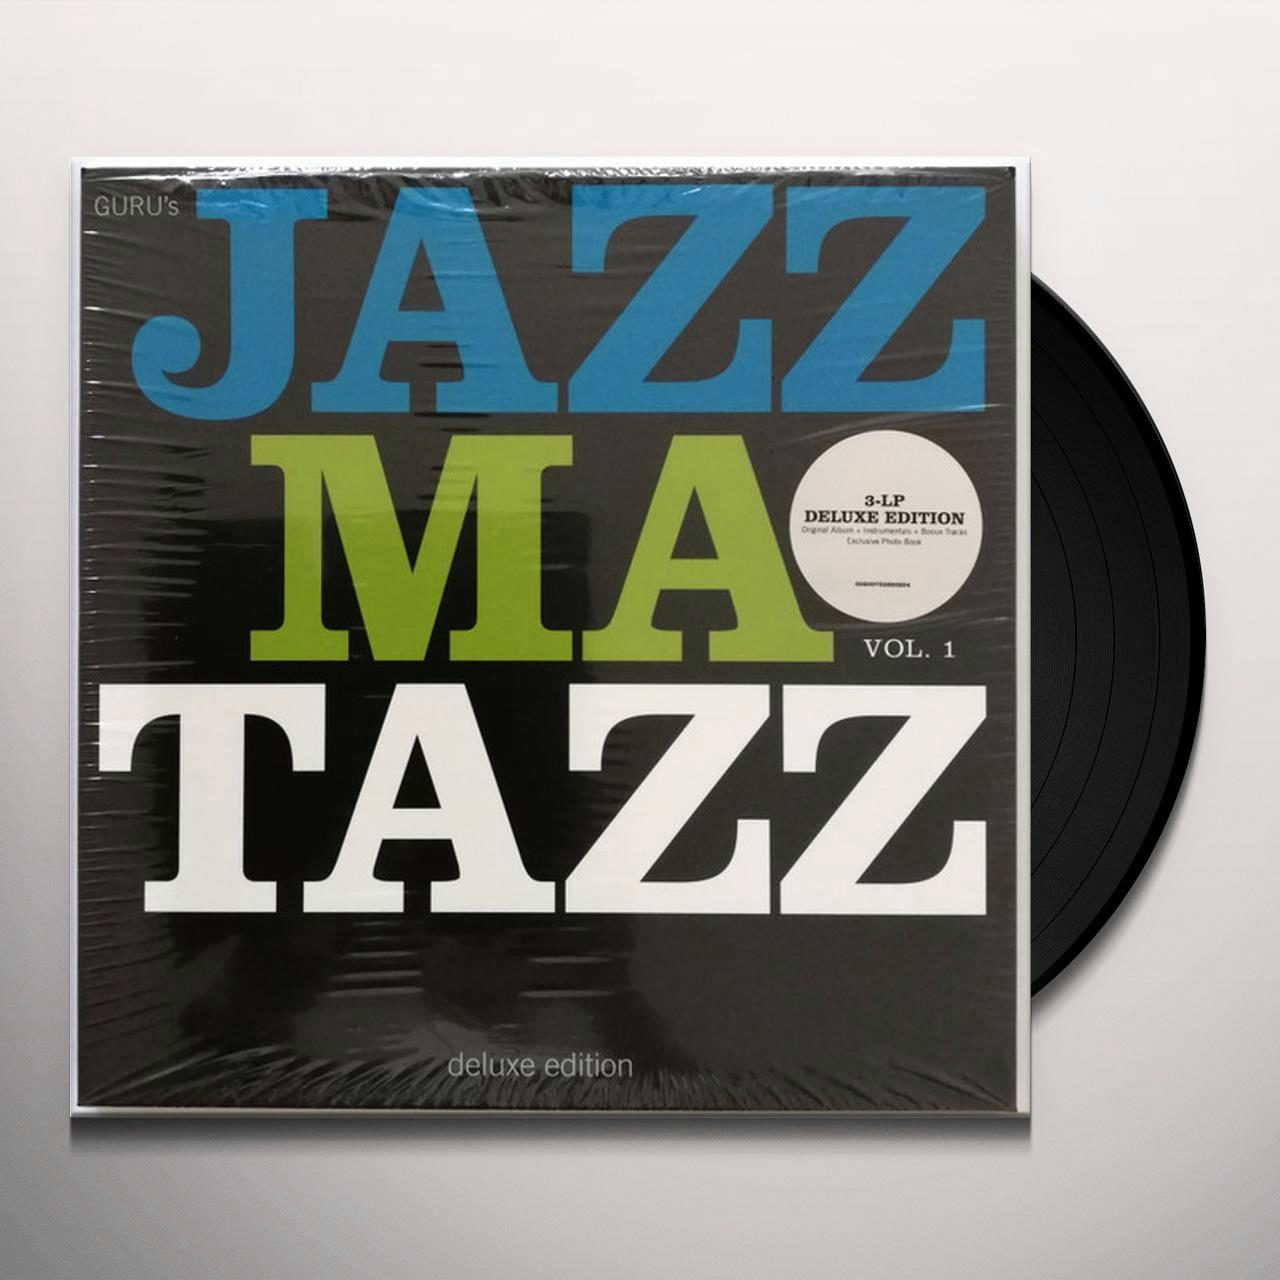 Jazzmatazz Volume 1 (180g) Vinyl Record